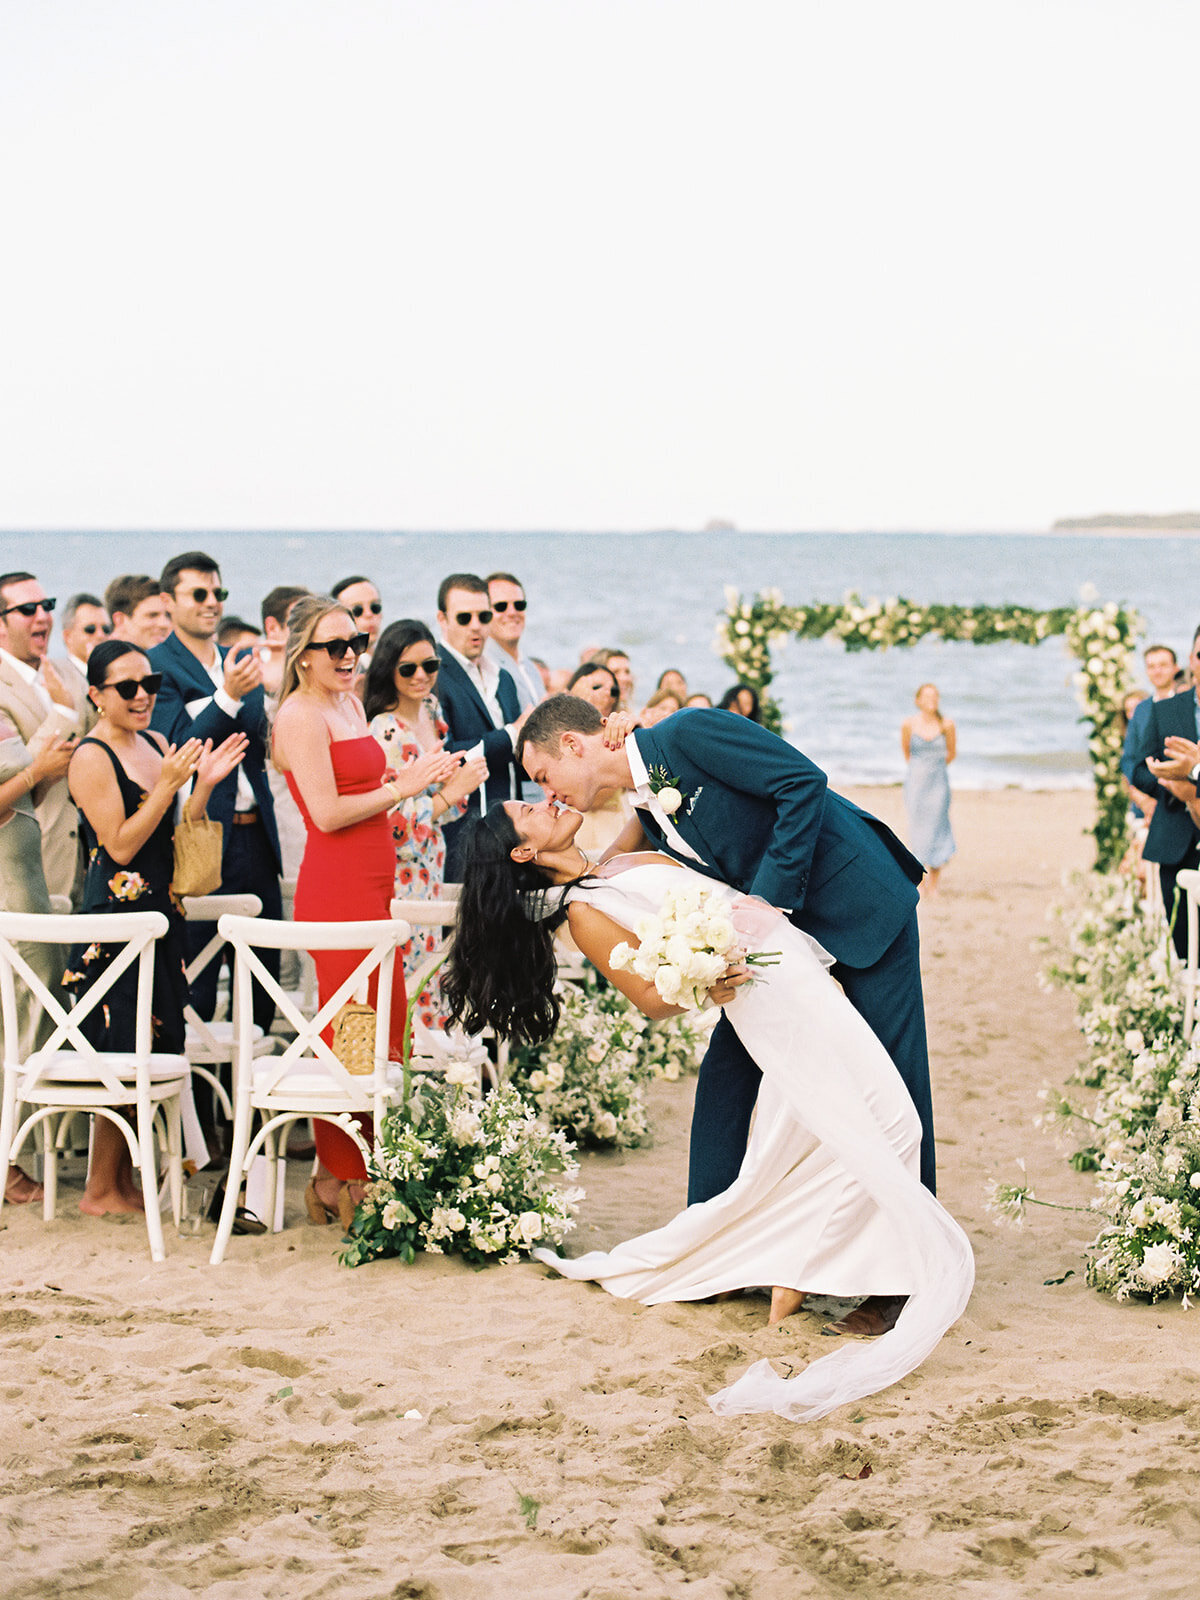 Couple kissing at their destination beach wedding